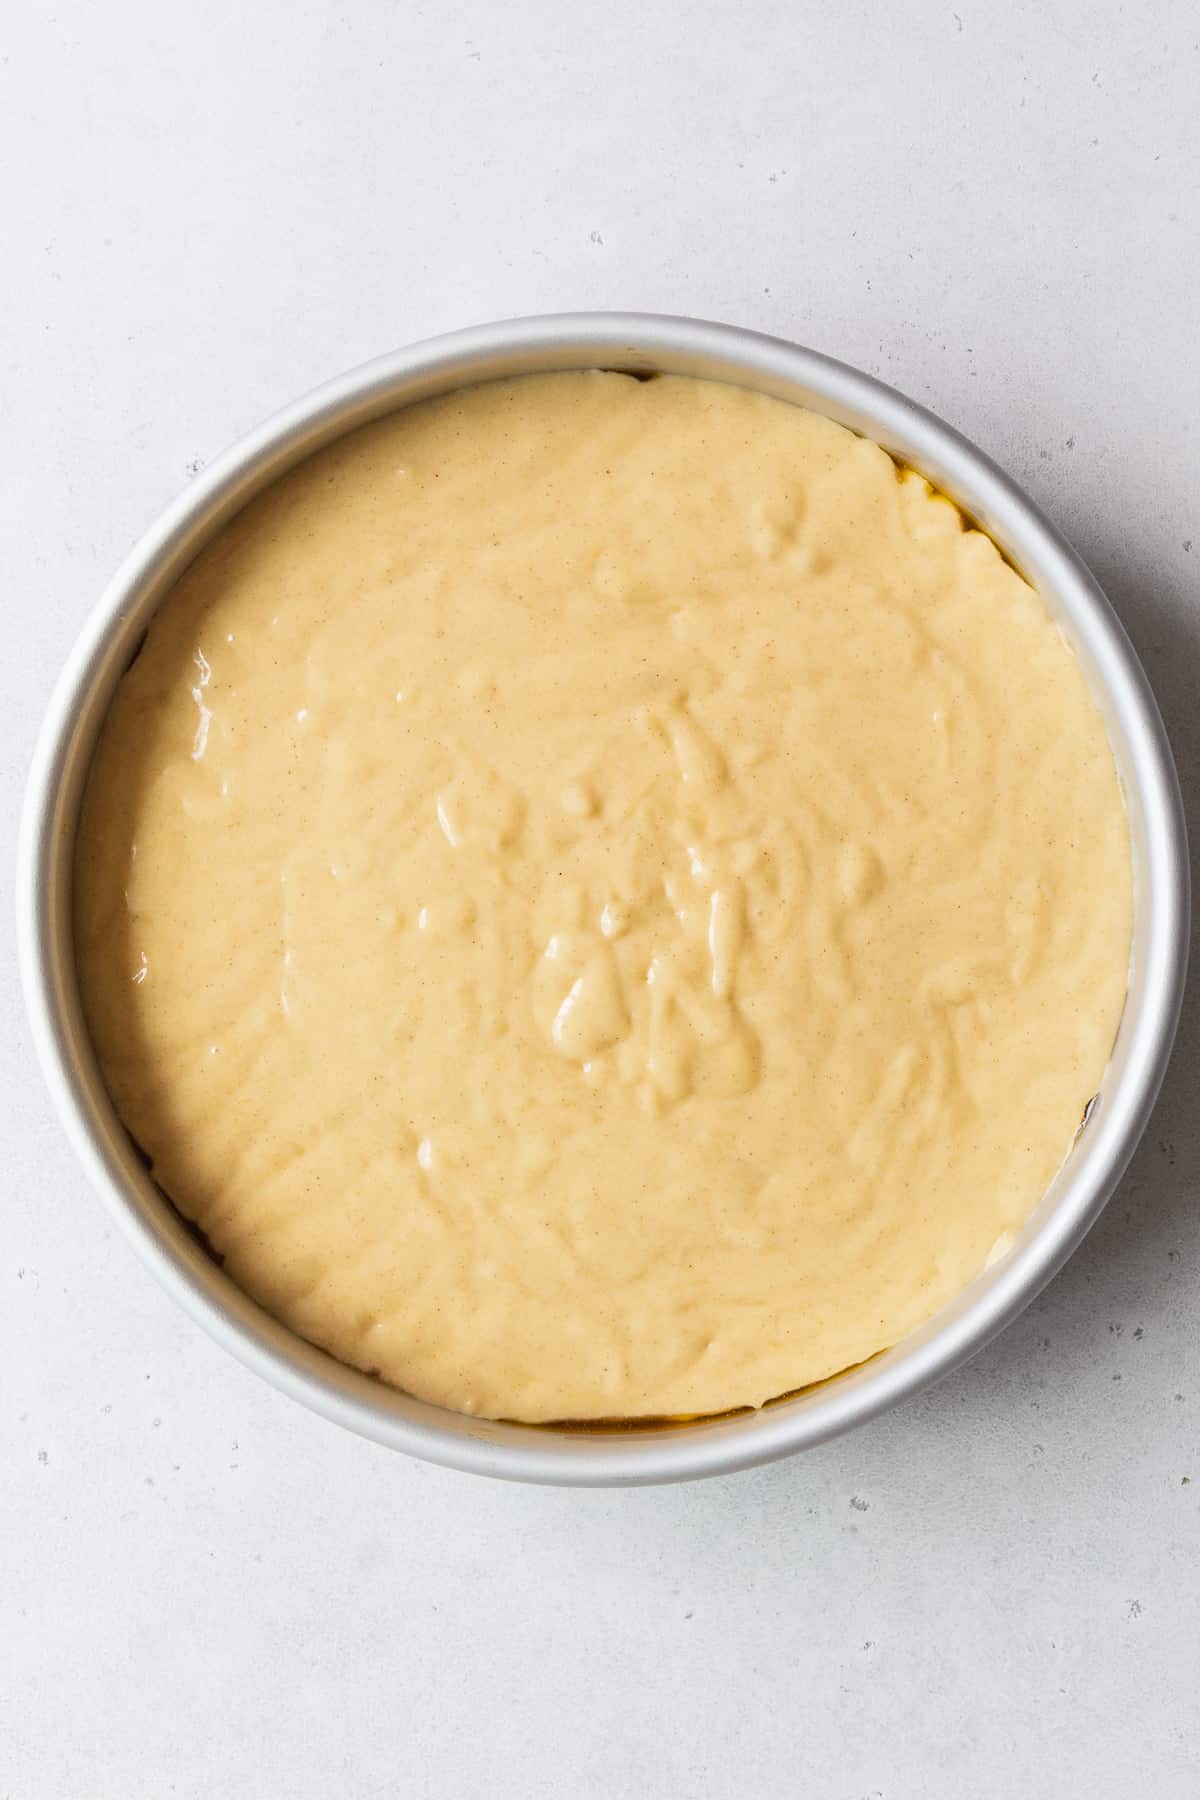 A pan of gluten-free pineapple upside down cake before baking.